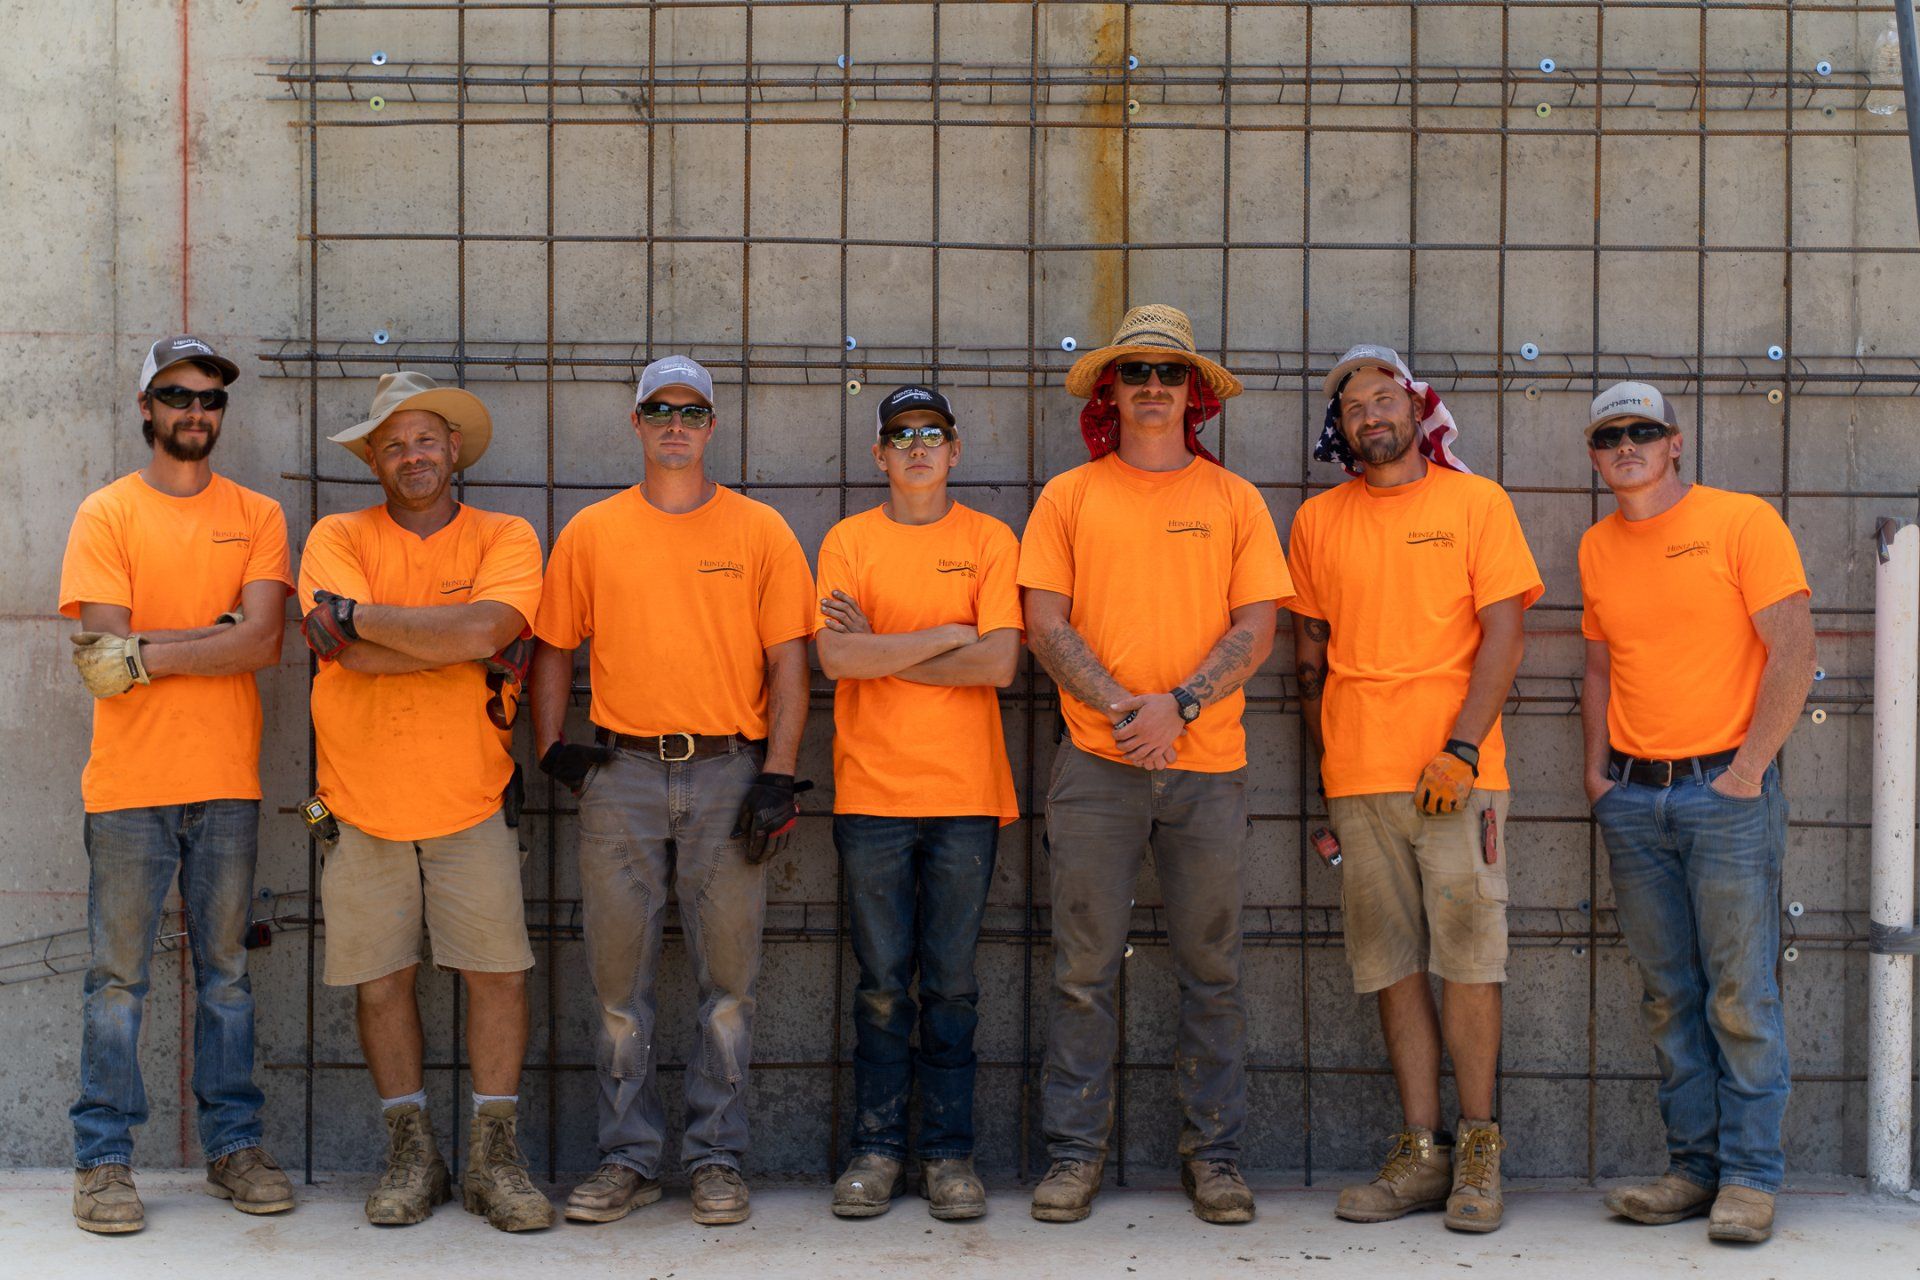 Seven members of Heintz Pool & Spa team in orange uniform standing side by side